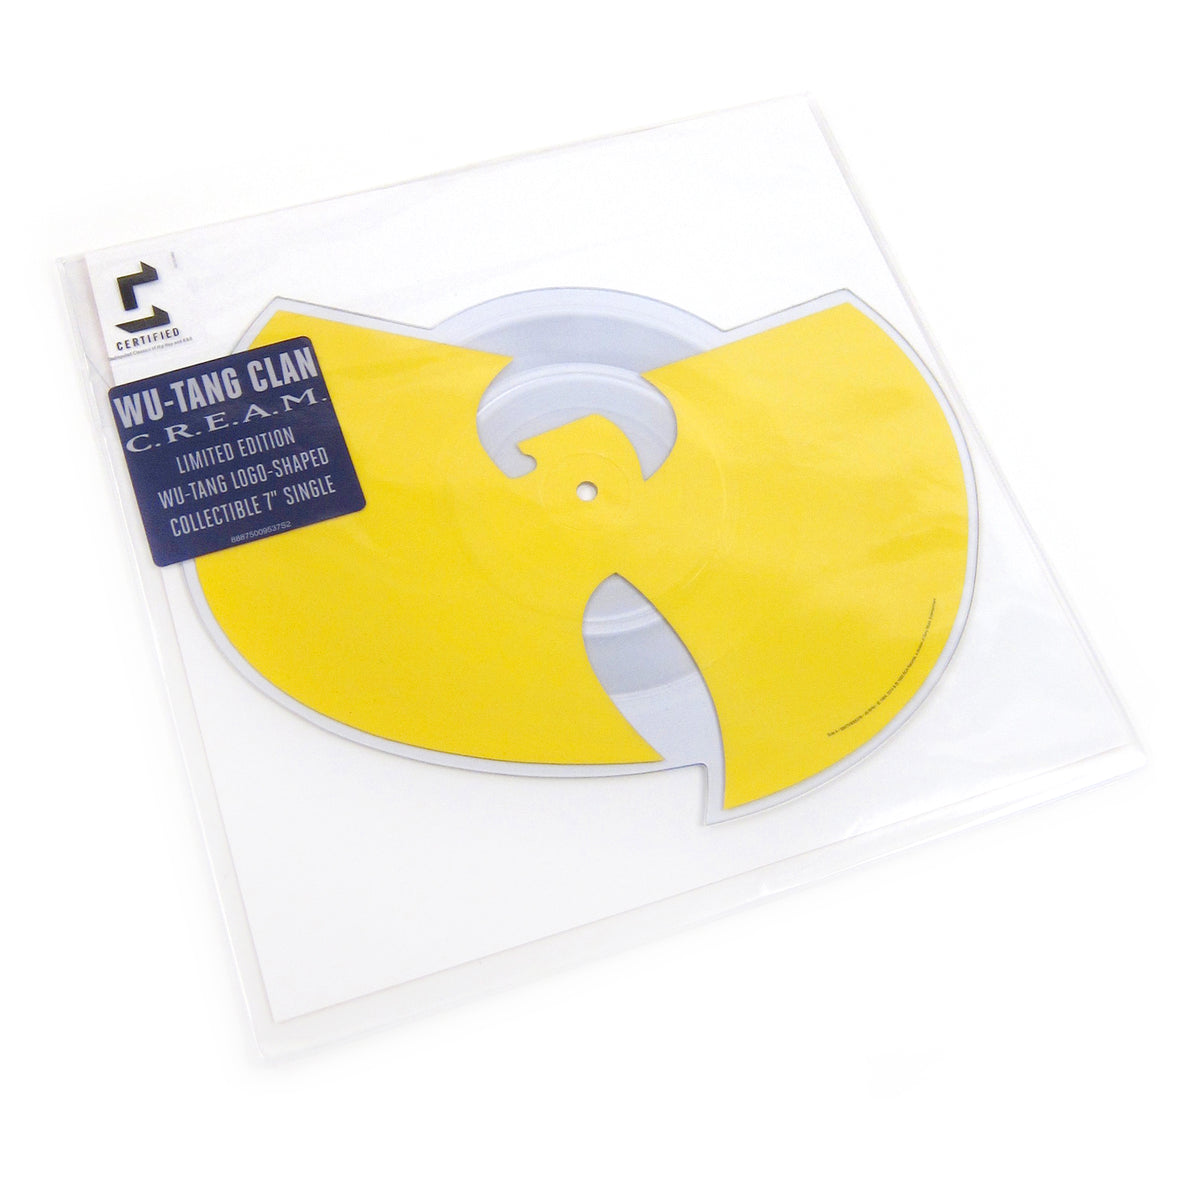 Wu-Tang Clan C.R.E.A.M. Da Mystery of Chessboxin 12” maxi single